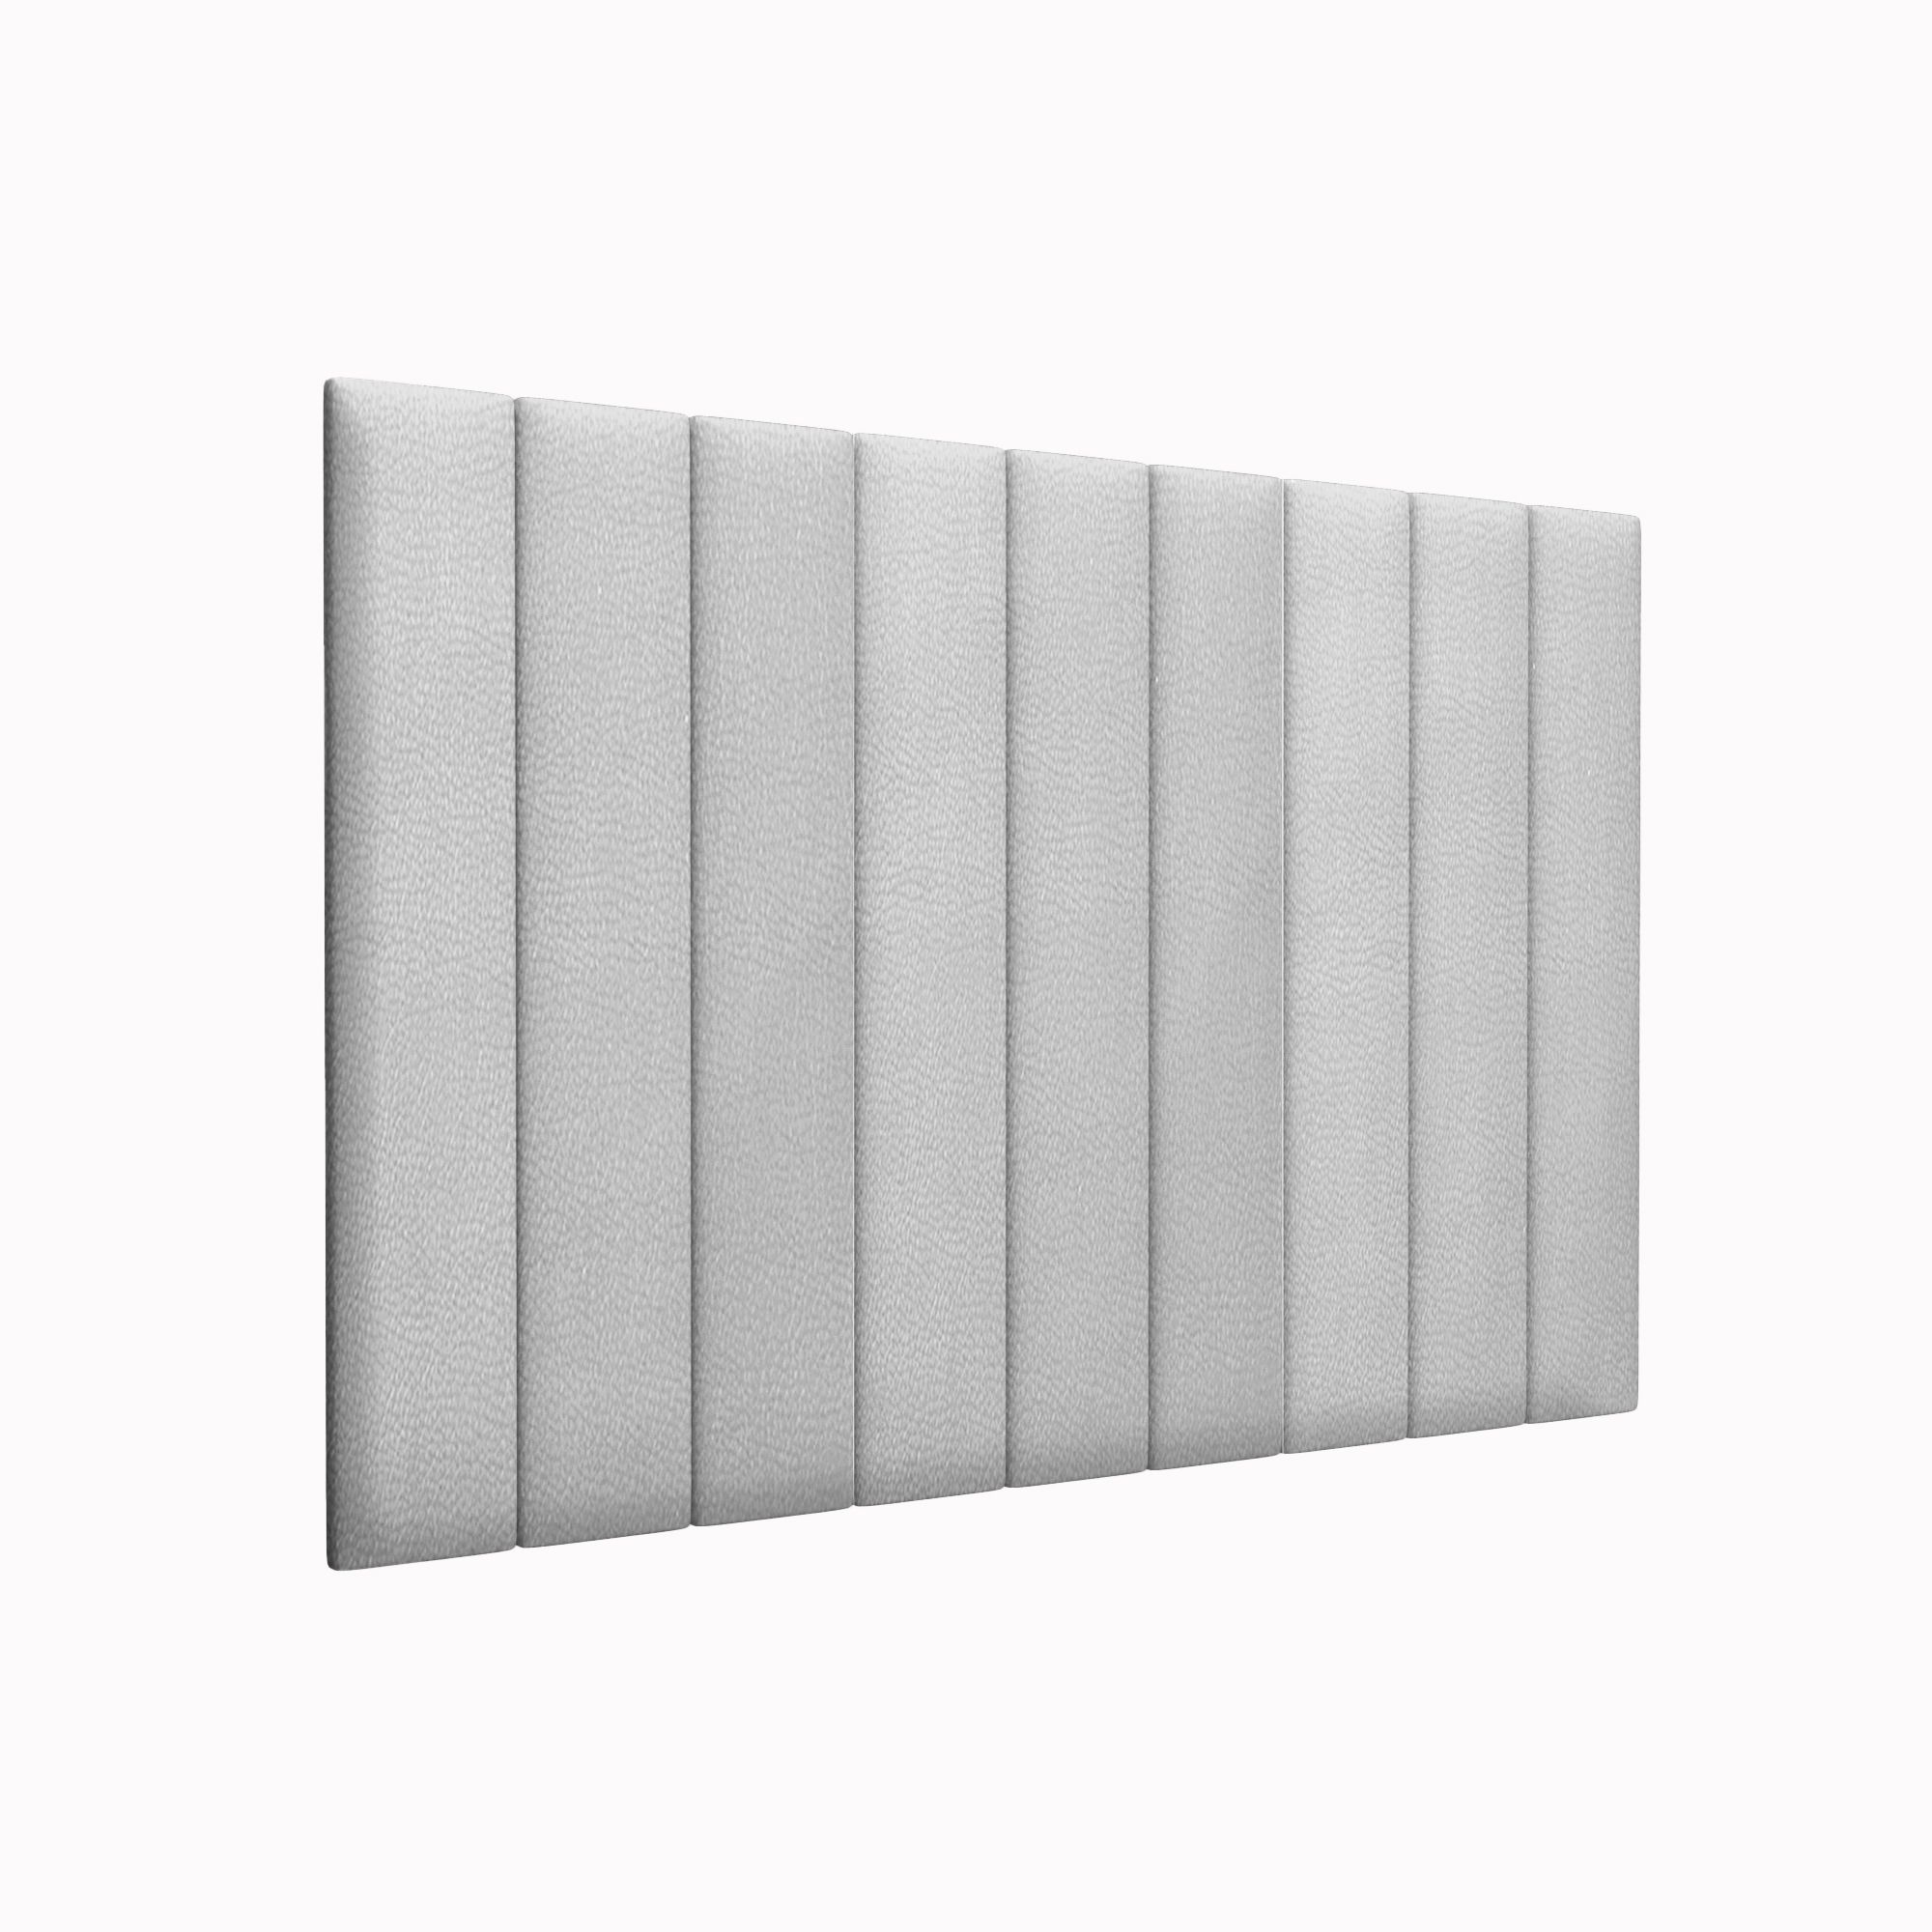 Мягкие стеновые панели Eco Leather Silver 15х90 см 4 шт.